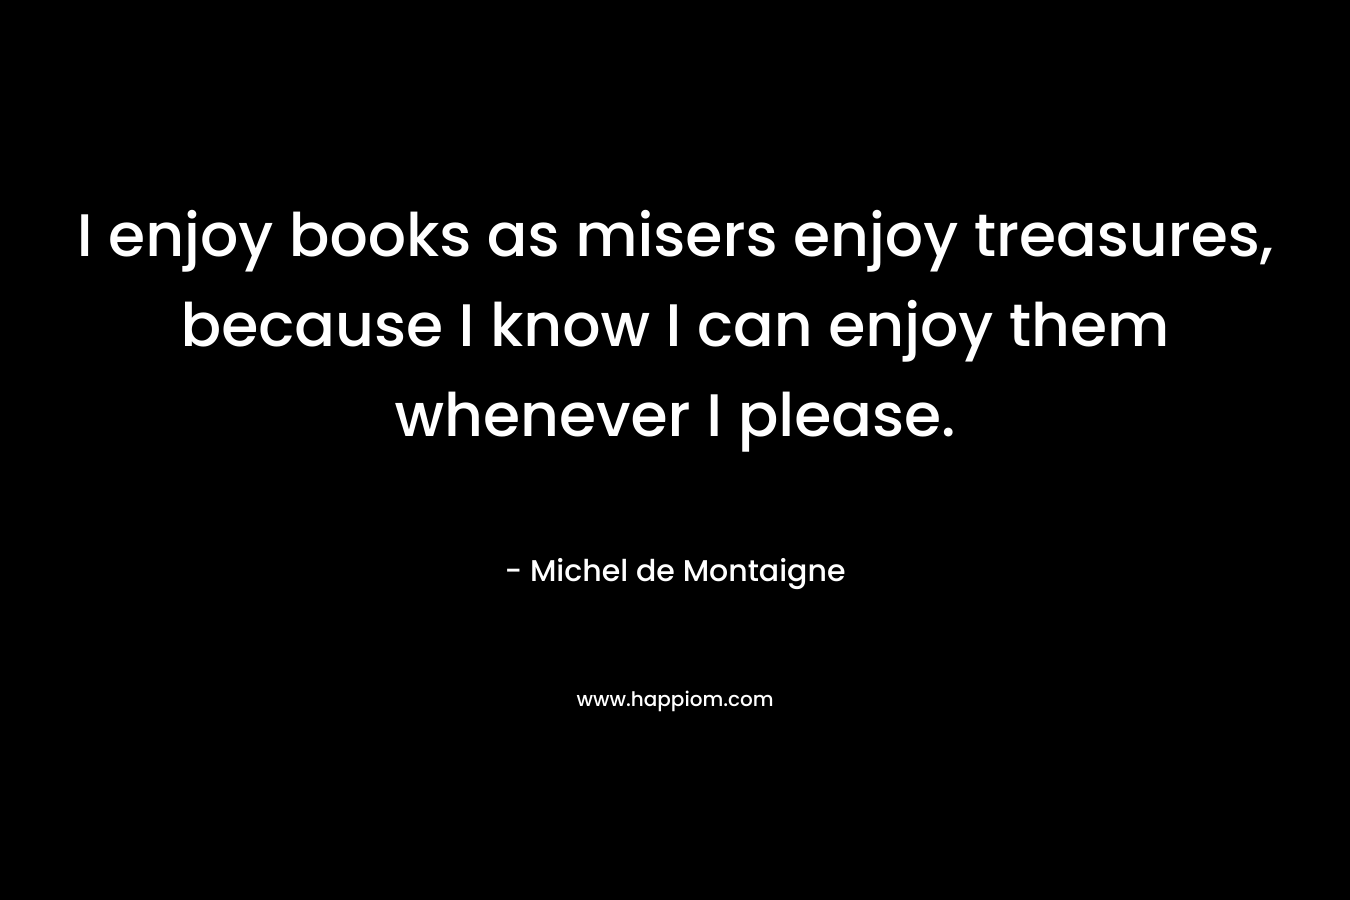 I enjoy books as misers enjoy treasures, because I know I can enjoy them whenever I please.